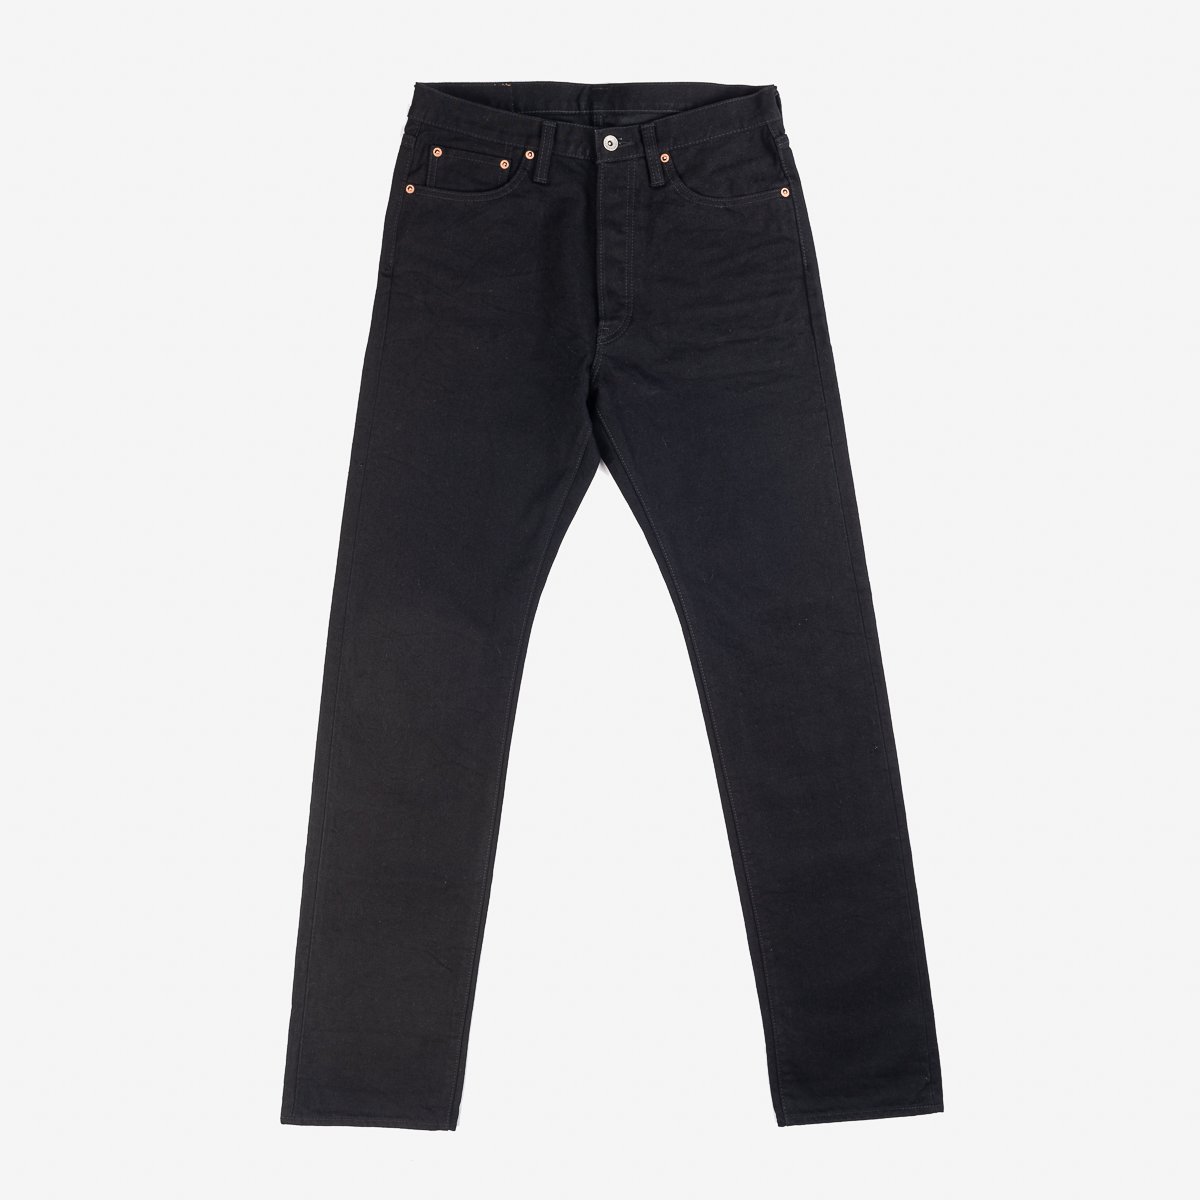 14oz Selvedge Denim Medium/High-Rise Tapered Jeans Black/Black